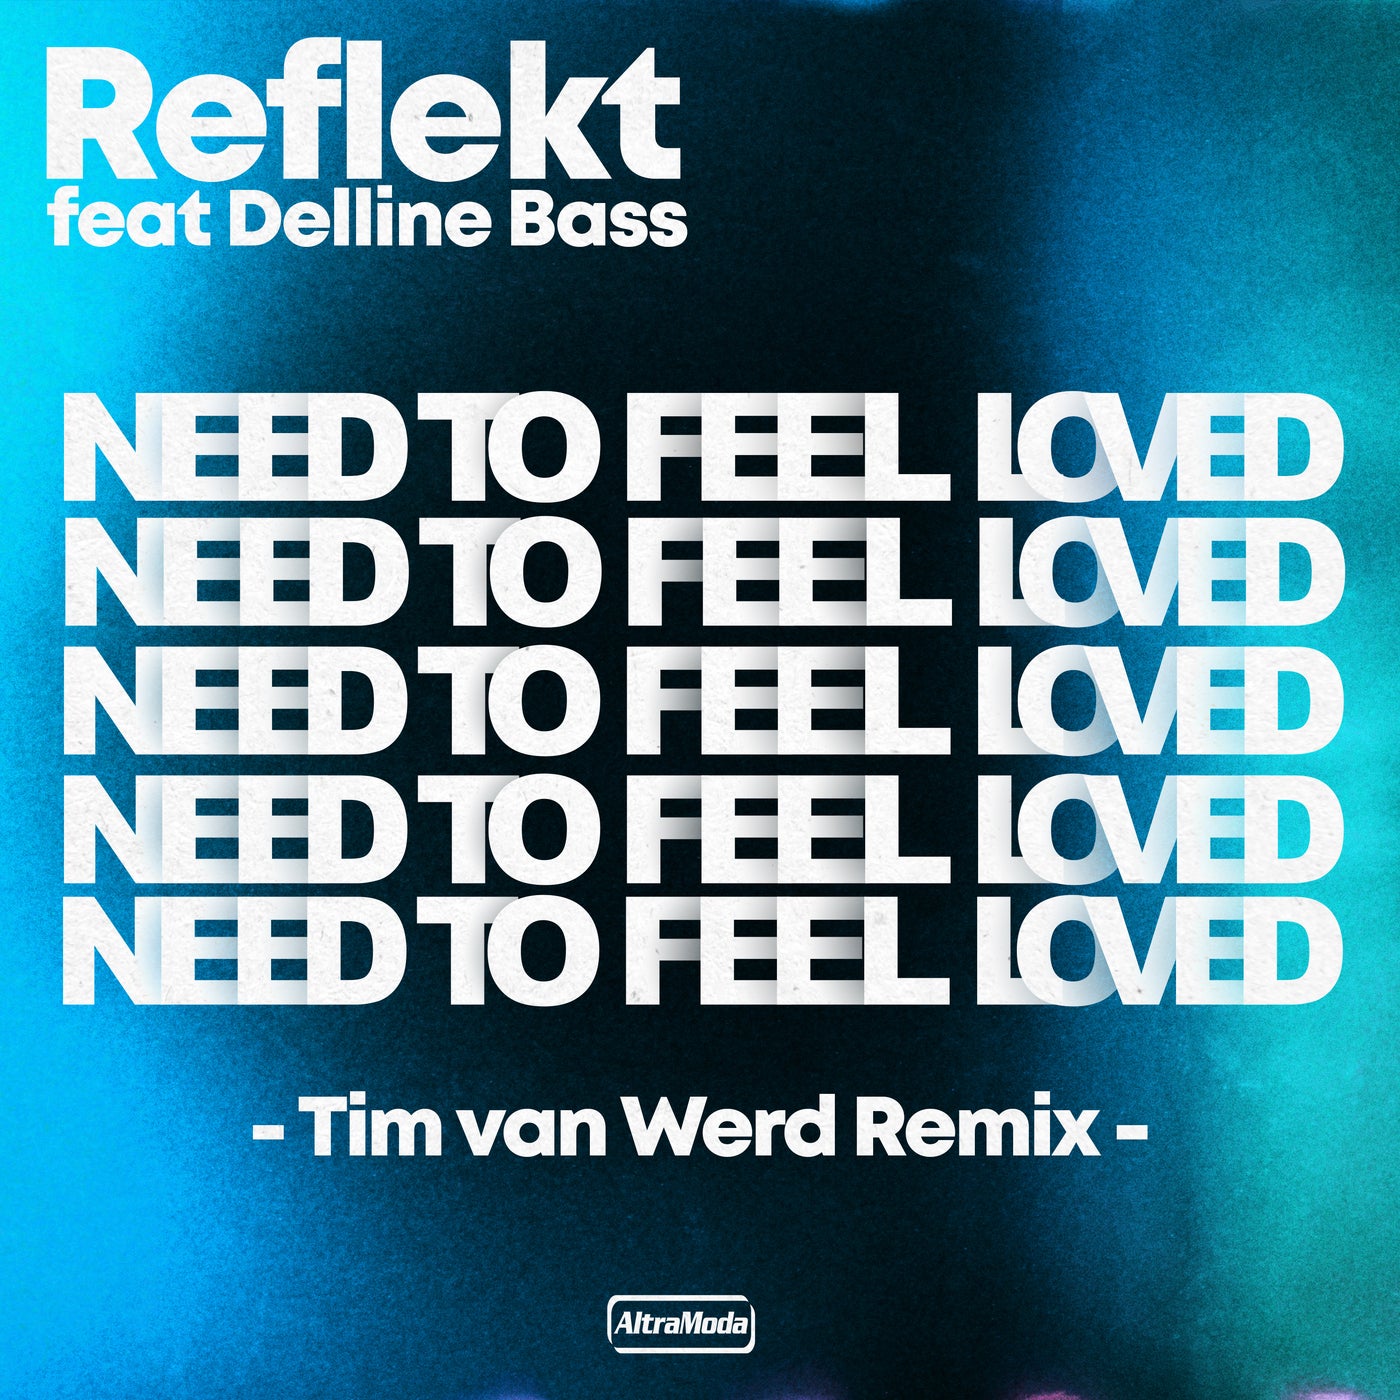 Need To Feel Loved - Tim van Werd Remix